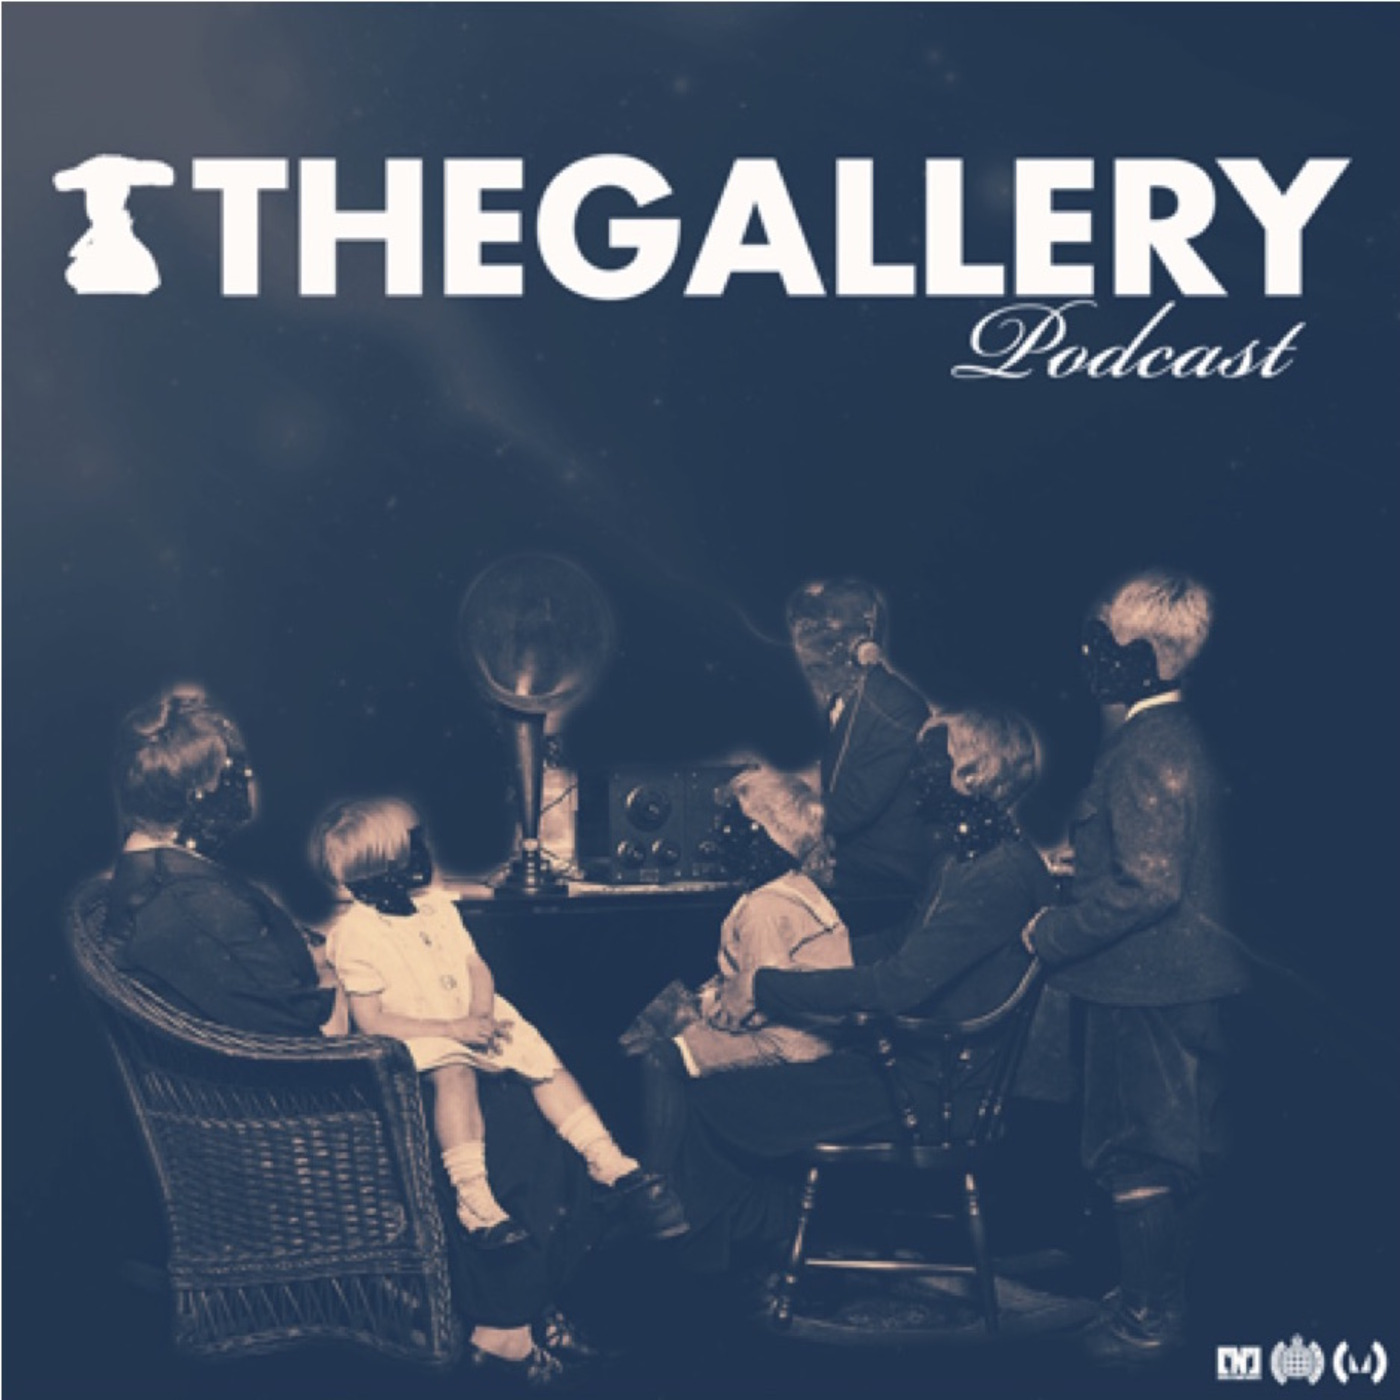  The Gallery Podcast Episode 174 W/ Tristan D + Ummet Ozcan Guest Mix